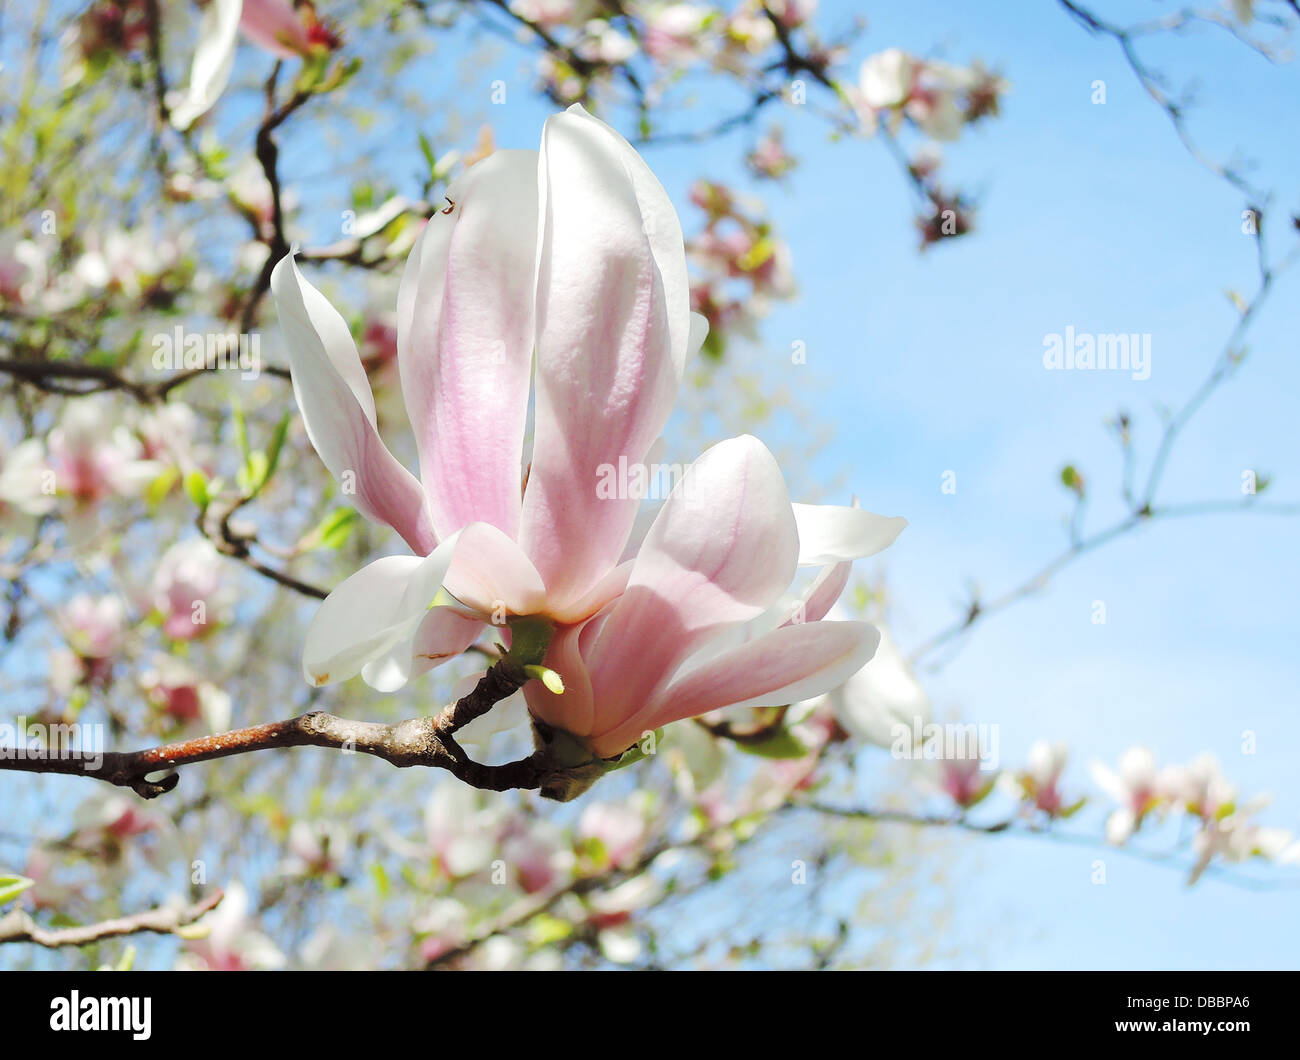 background, beautiful, bloom, blooming, blossom, blossom background, blossom branch, blossom tree, botany, branch, buds, cheerfu Stock Photo